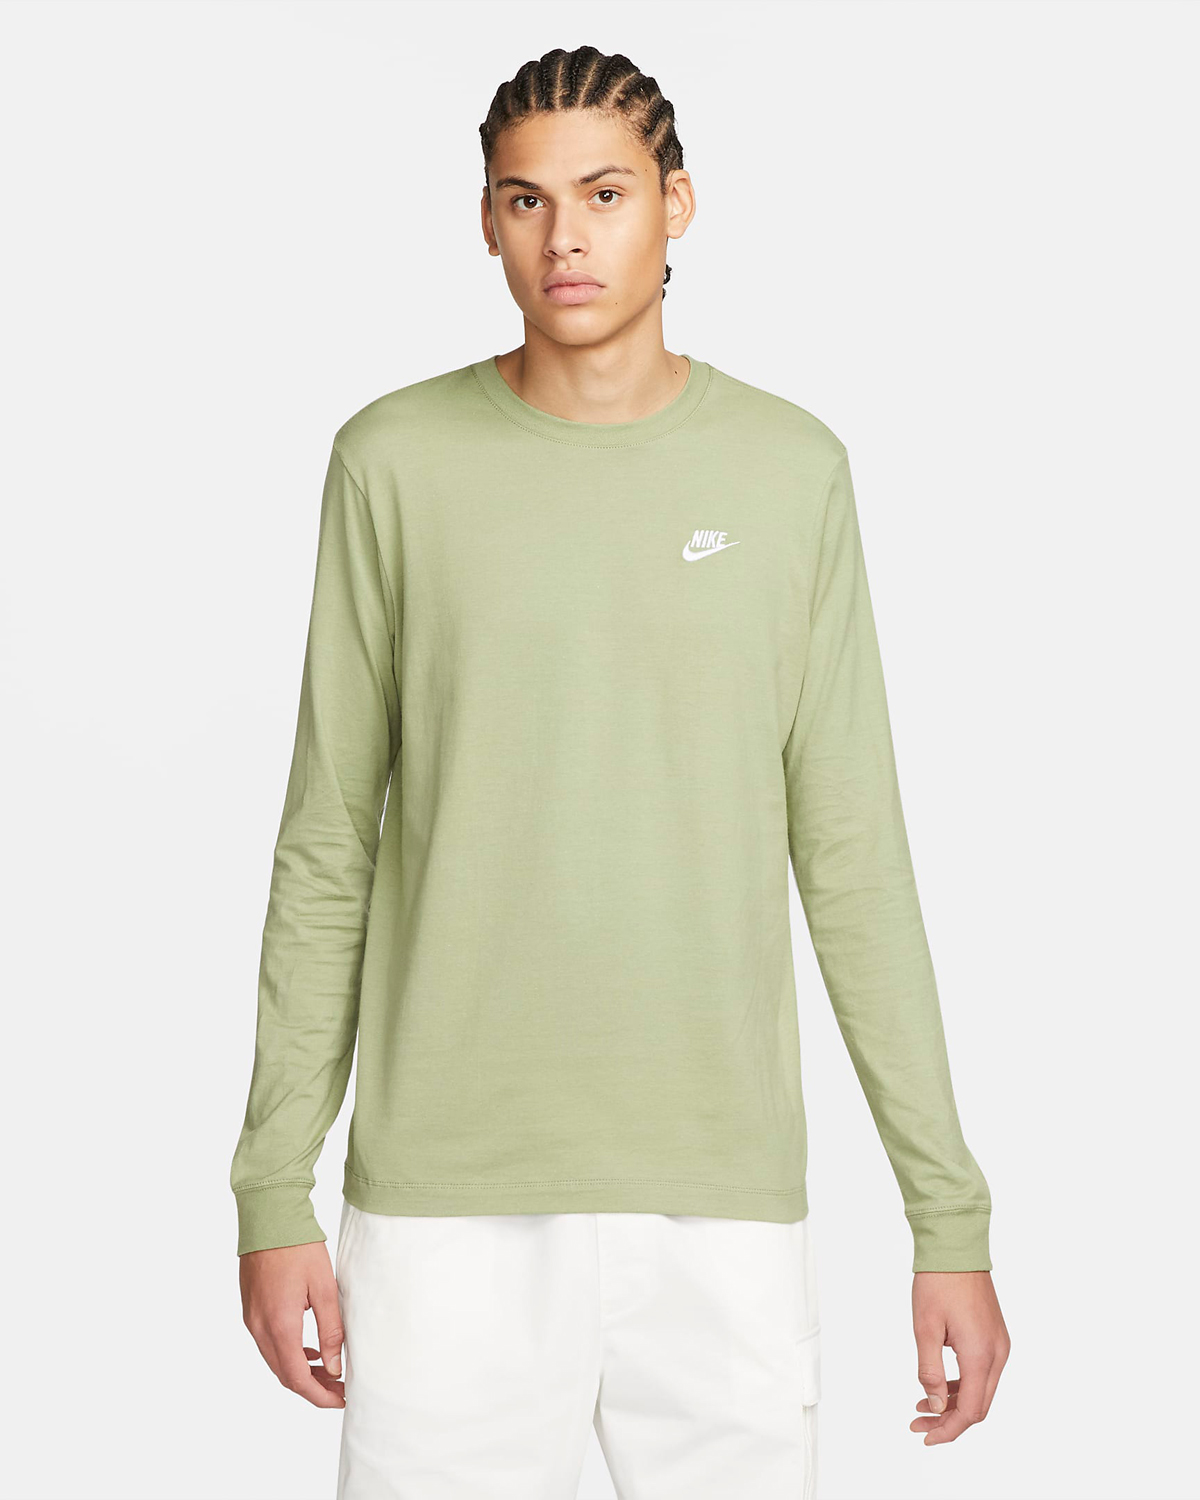 Nike-Oil-Green-Long-Sleeve-T-Shirt